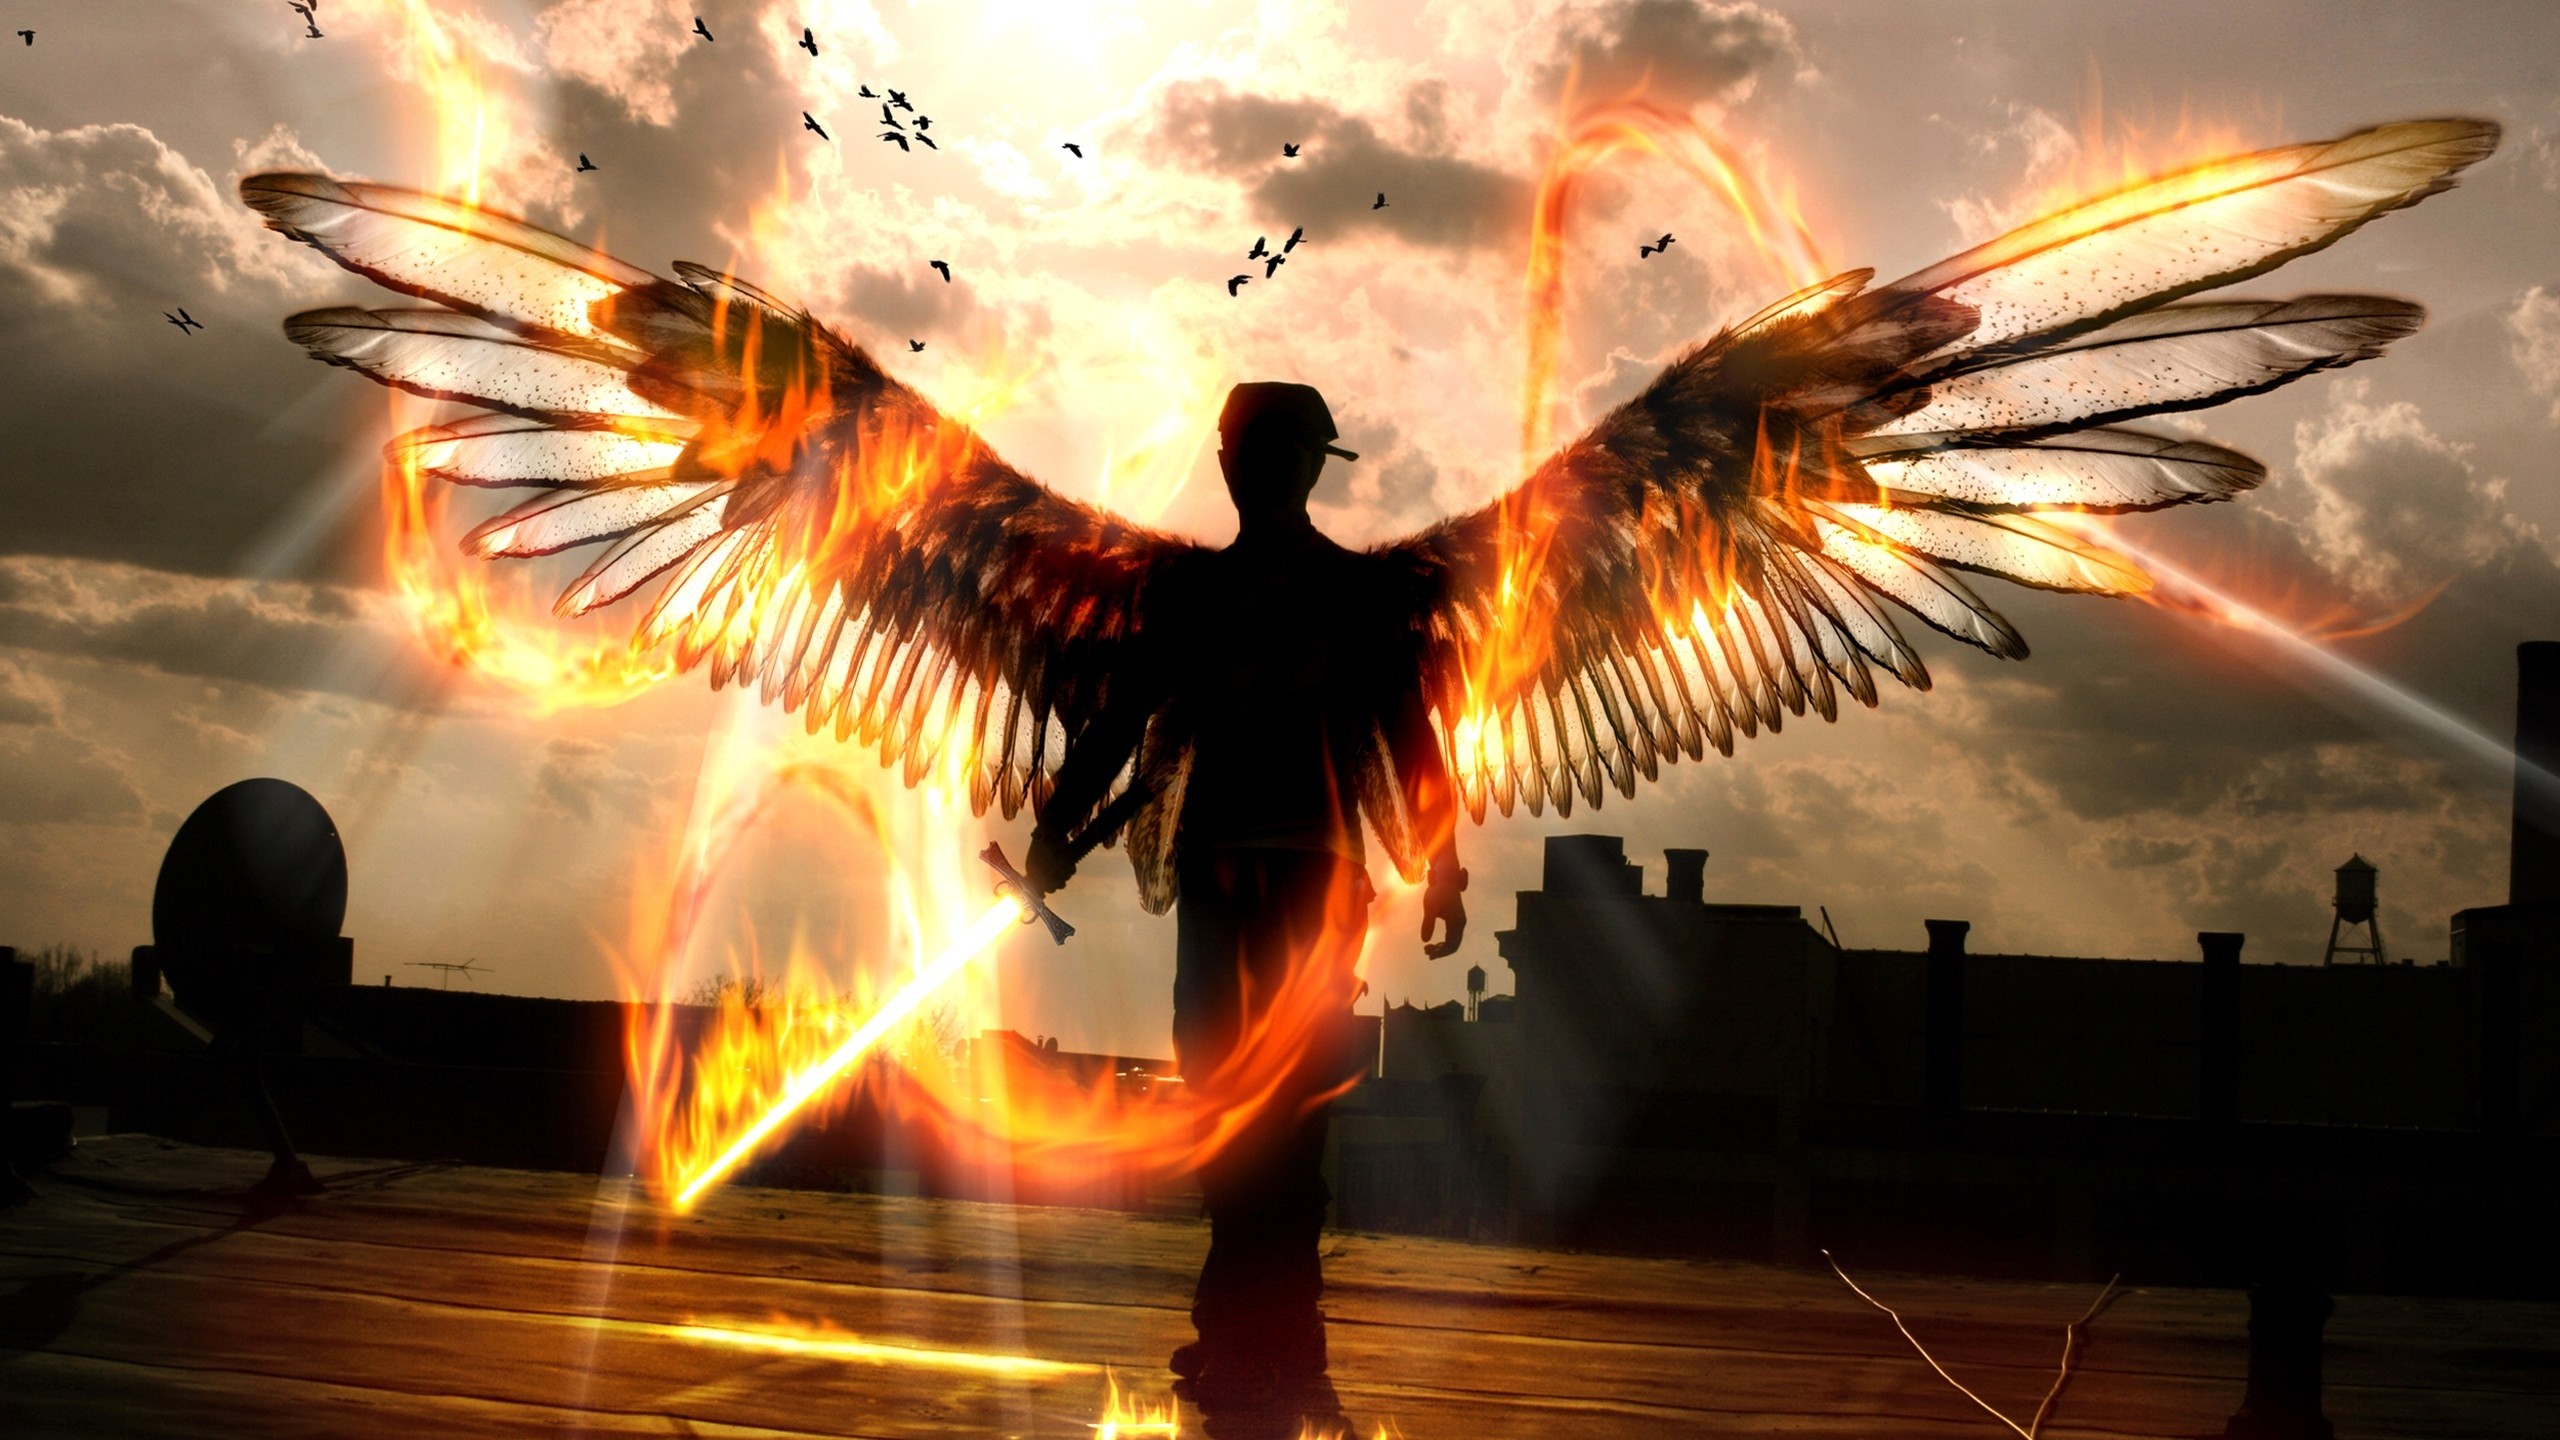 General 2560x1440 Flame Painter digital art outdoors wings silhouette urban sky birds sunlight